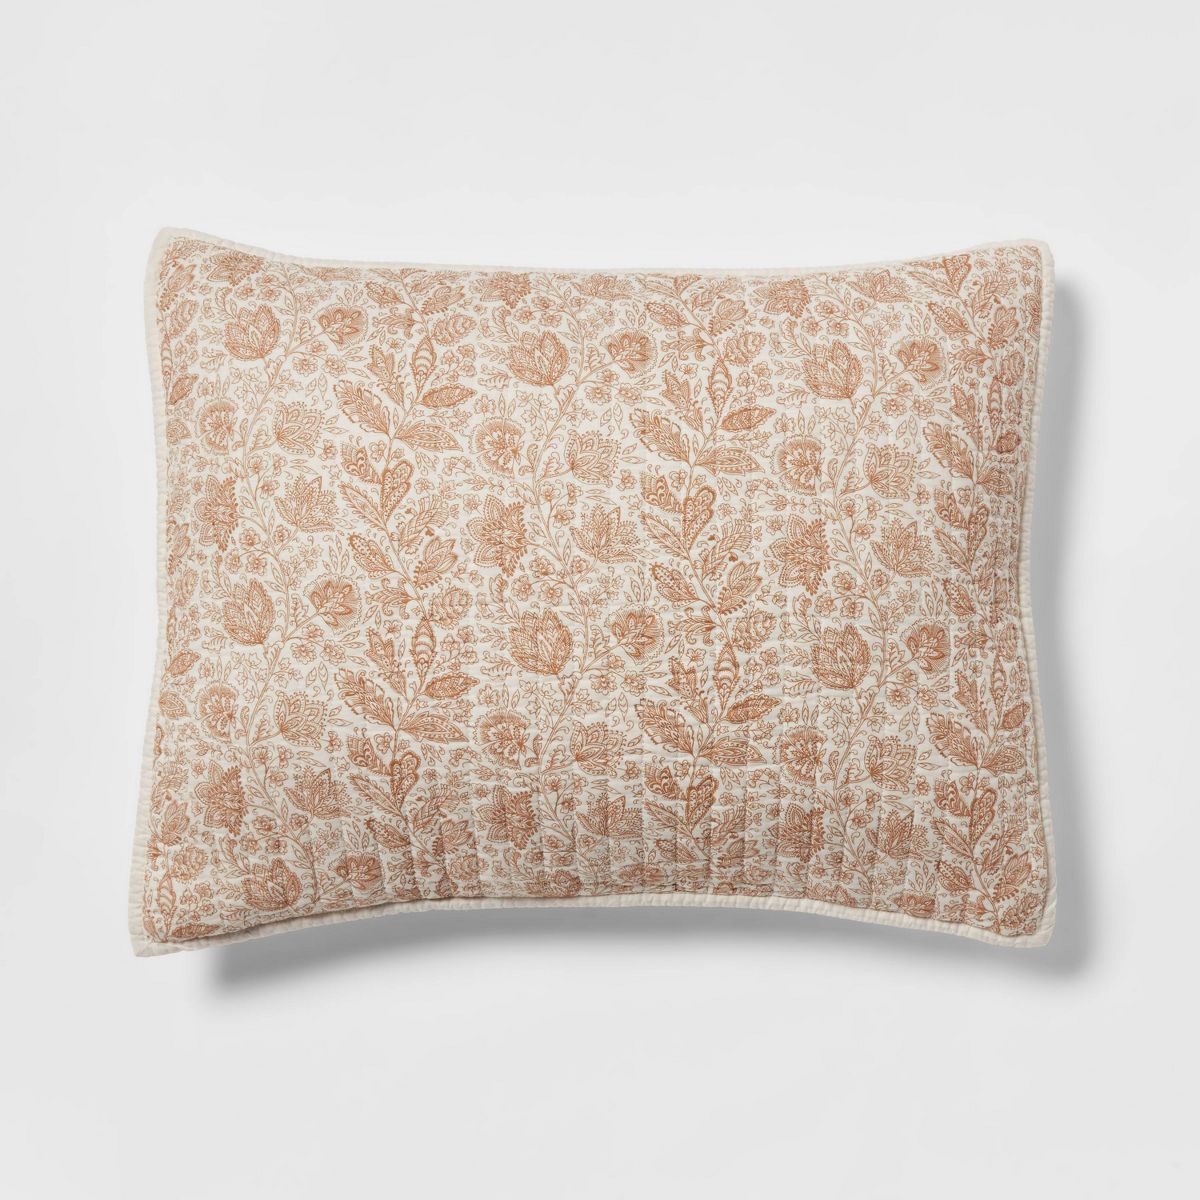 Standard Printed Cotton Voile Tonal Floral Quilt Sham Ivory/Camel - Threshold™ | Target